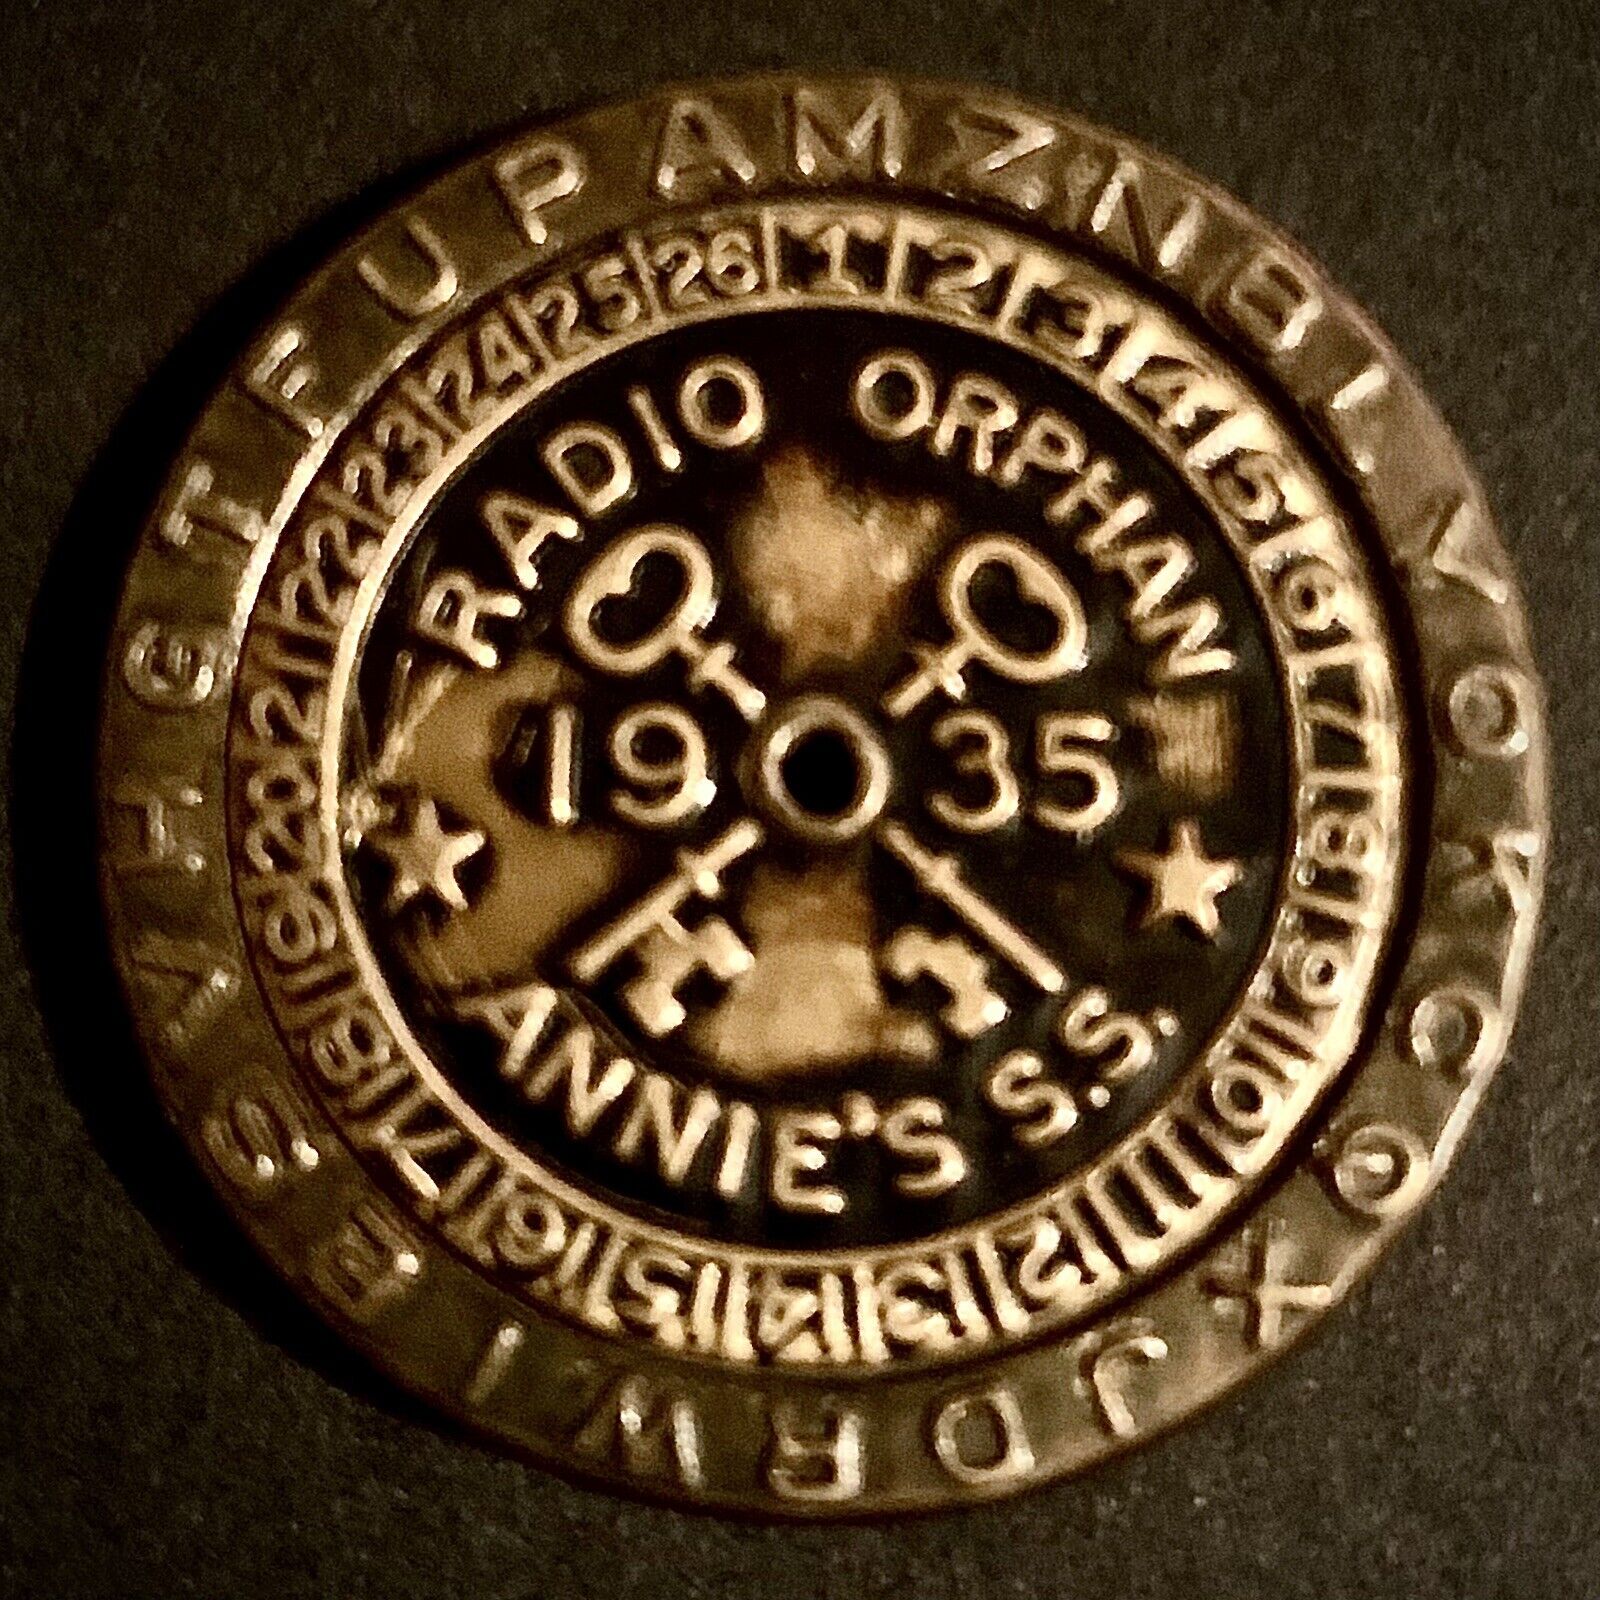 1935 RADIO ORPHAN ANNIE S.S. Secret Society 1st Year Decoder Pin -Hard Date